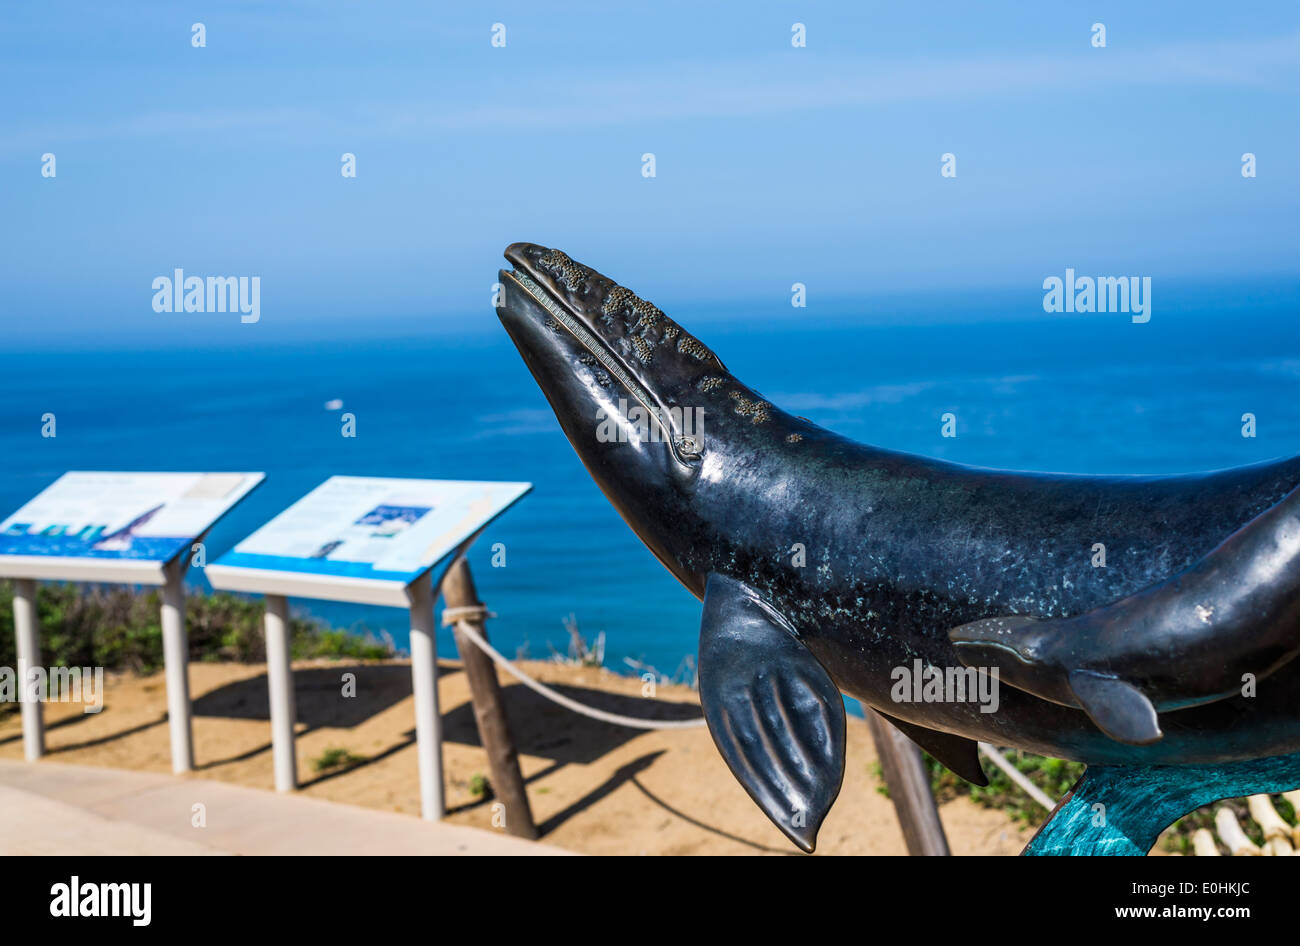 Sculpture de baleine grise (par Carl Glowienke). Cabrillo National Monument, San Diego, California, United States. Banque D'Images